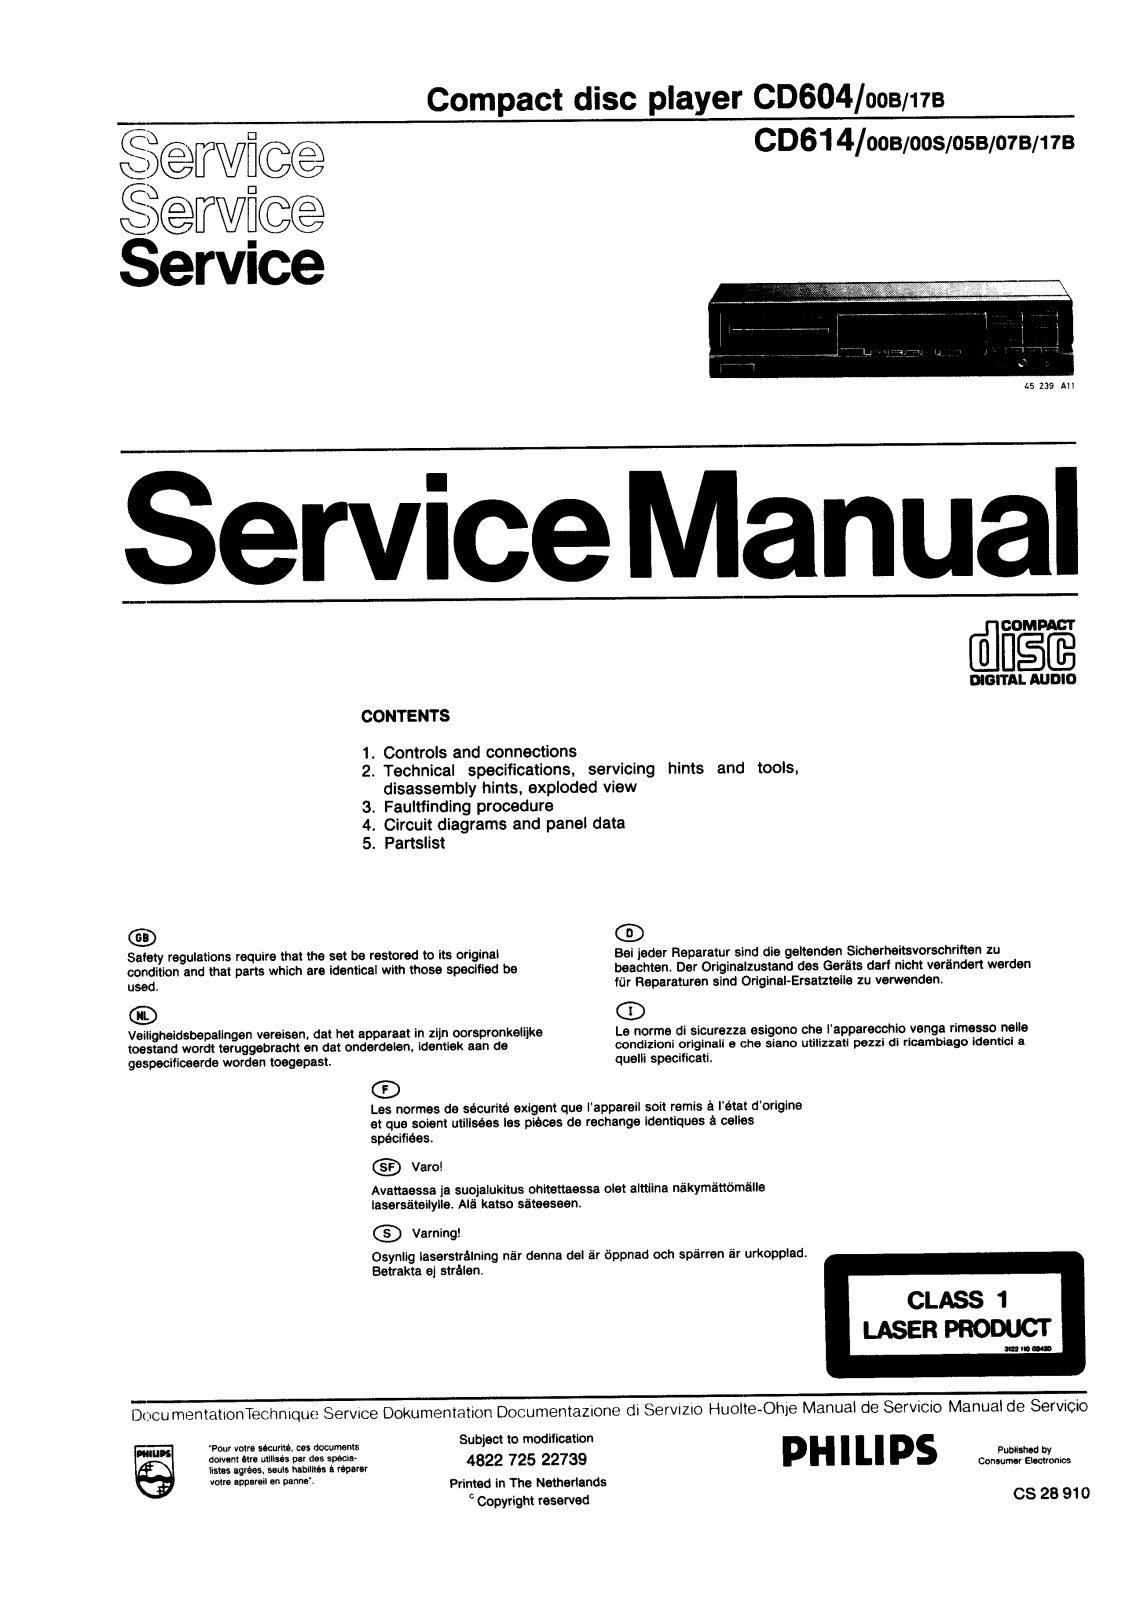 Philips CD-614 Service manual